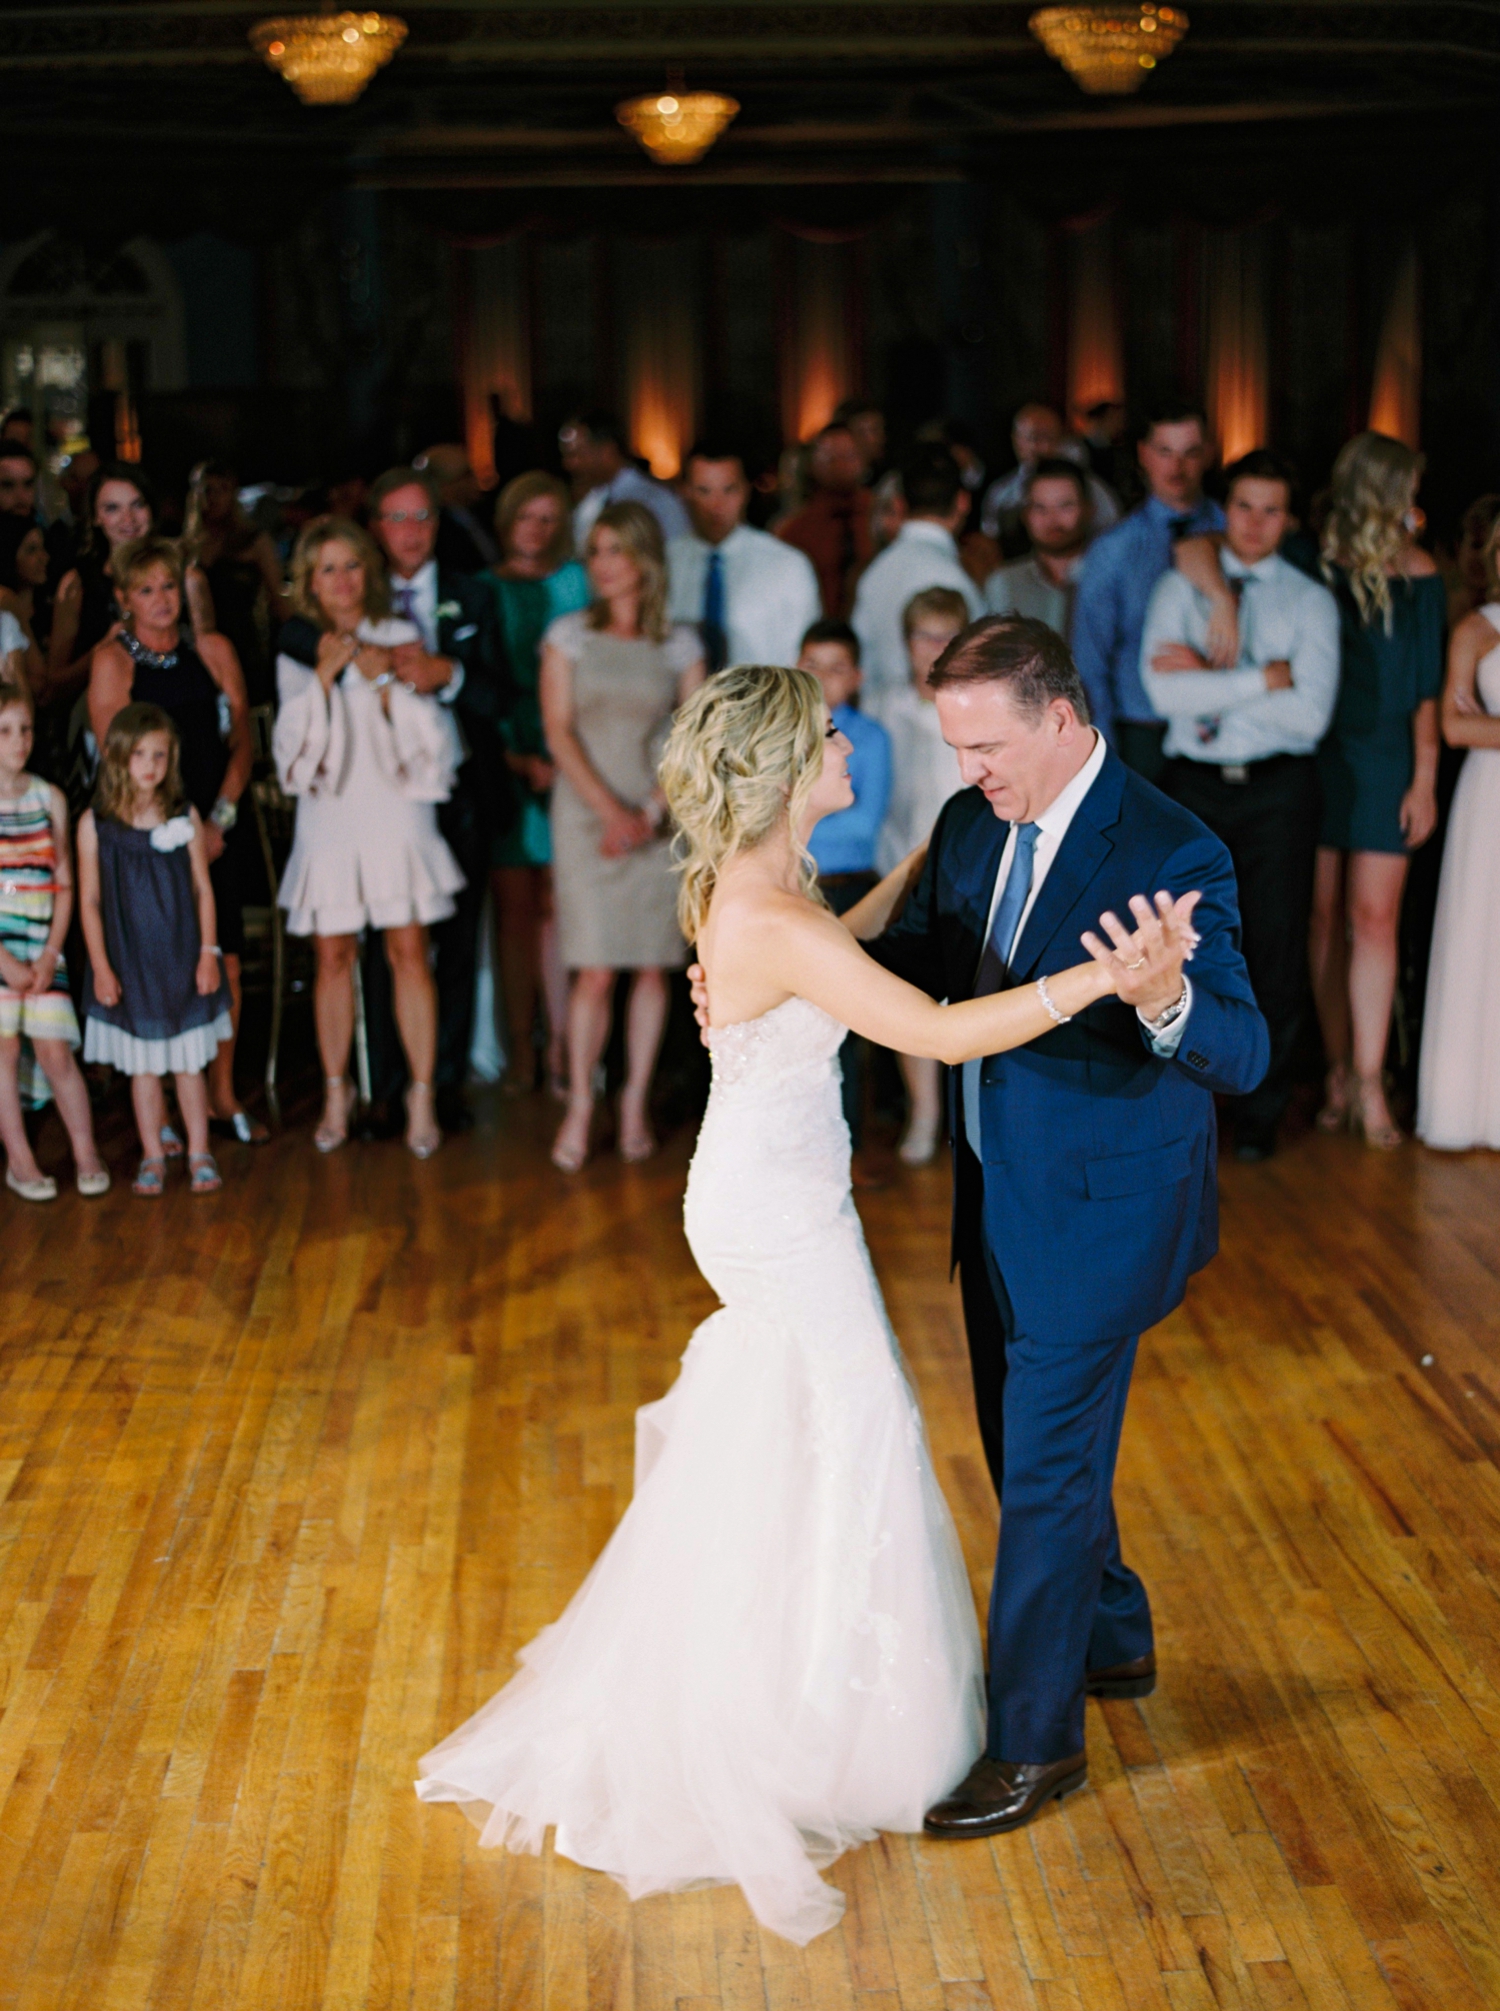 Fairmont Banff Springs Hotel wedding photographers | Justine Milton Fine Art Film Photography | Cascade Ballroom Wedding Reception | Lynn Fletcher Weddings Decor